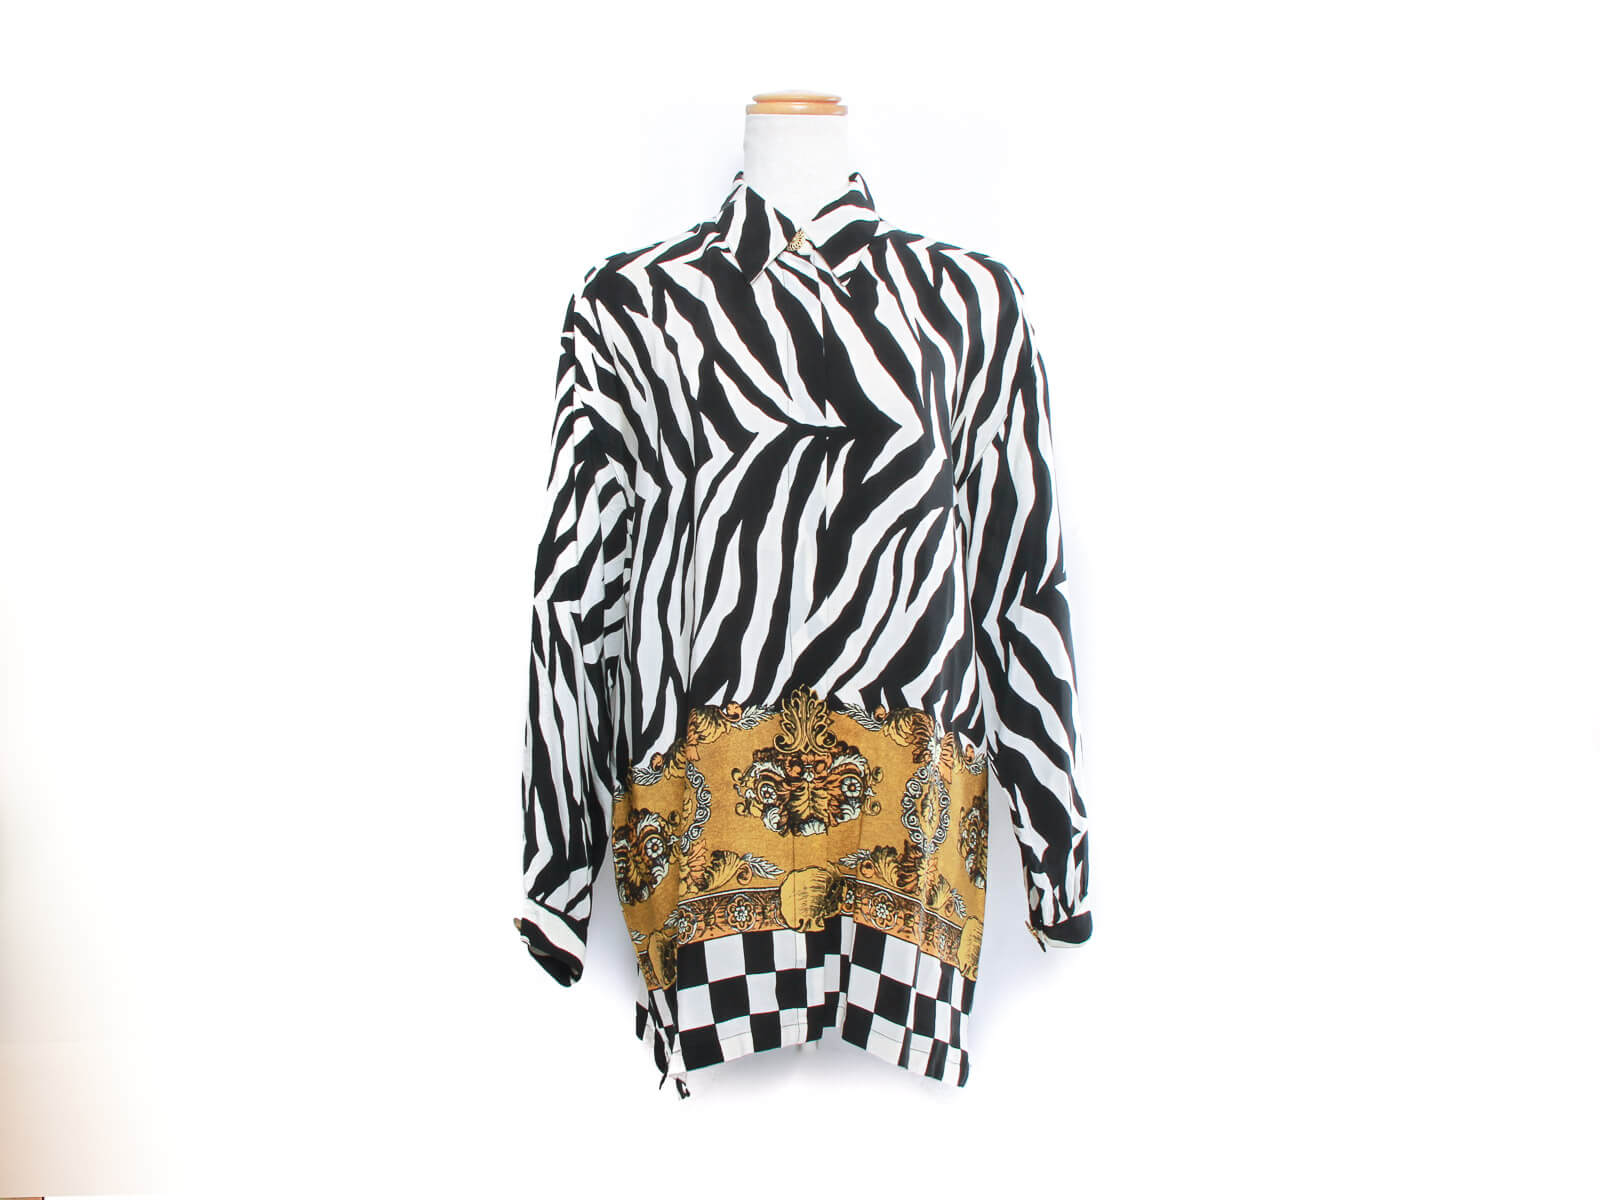 Authentic Gianni Versace vintage zebra pattern silk shirt unisex